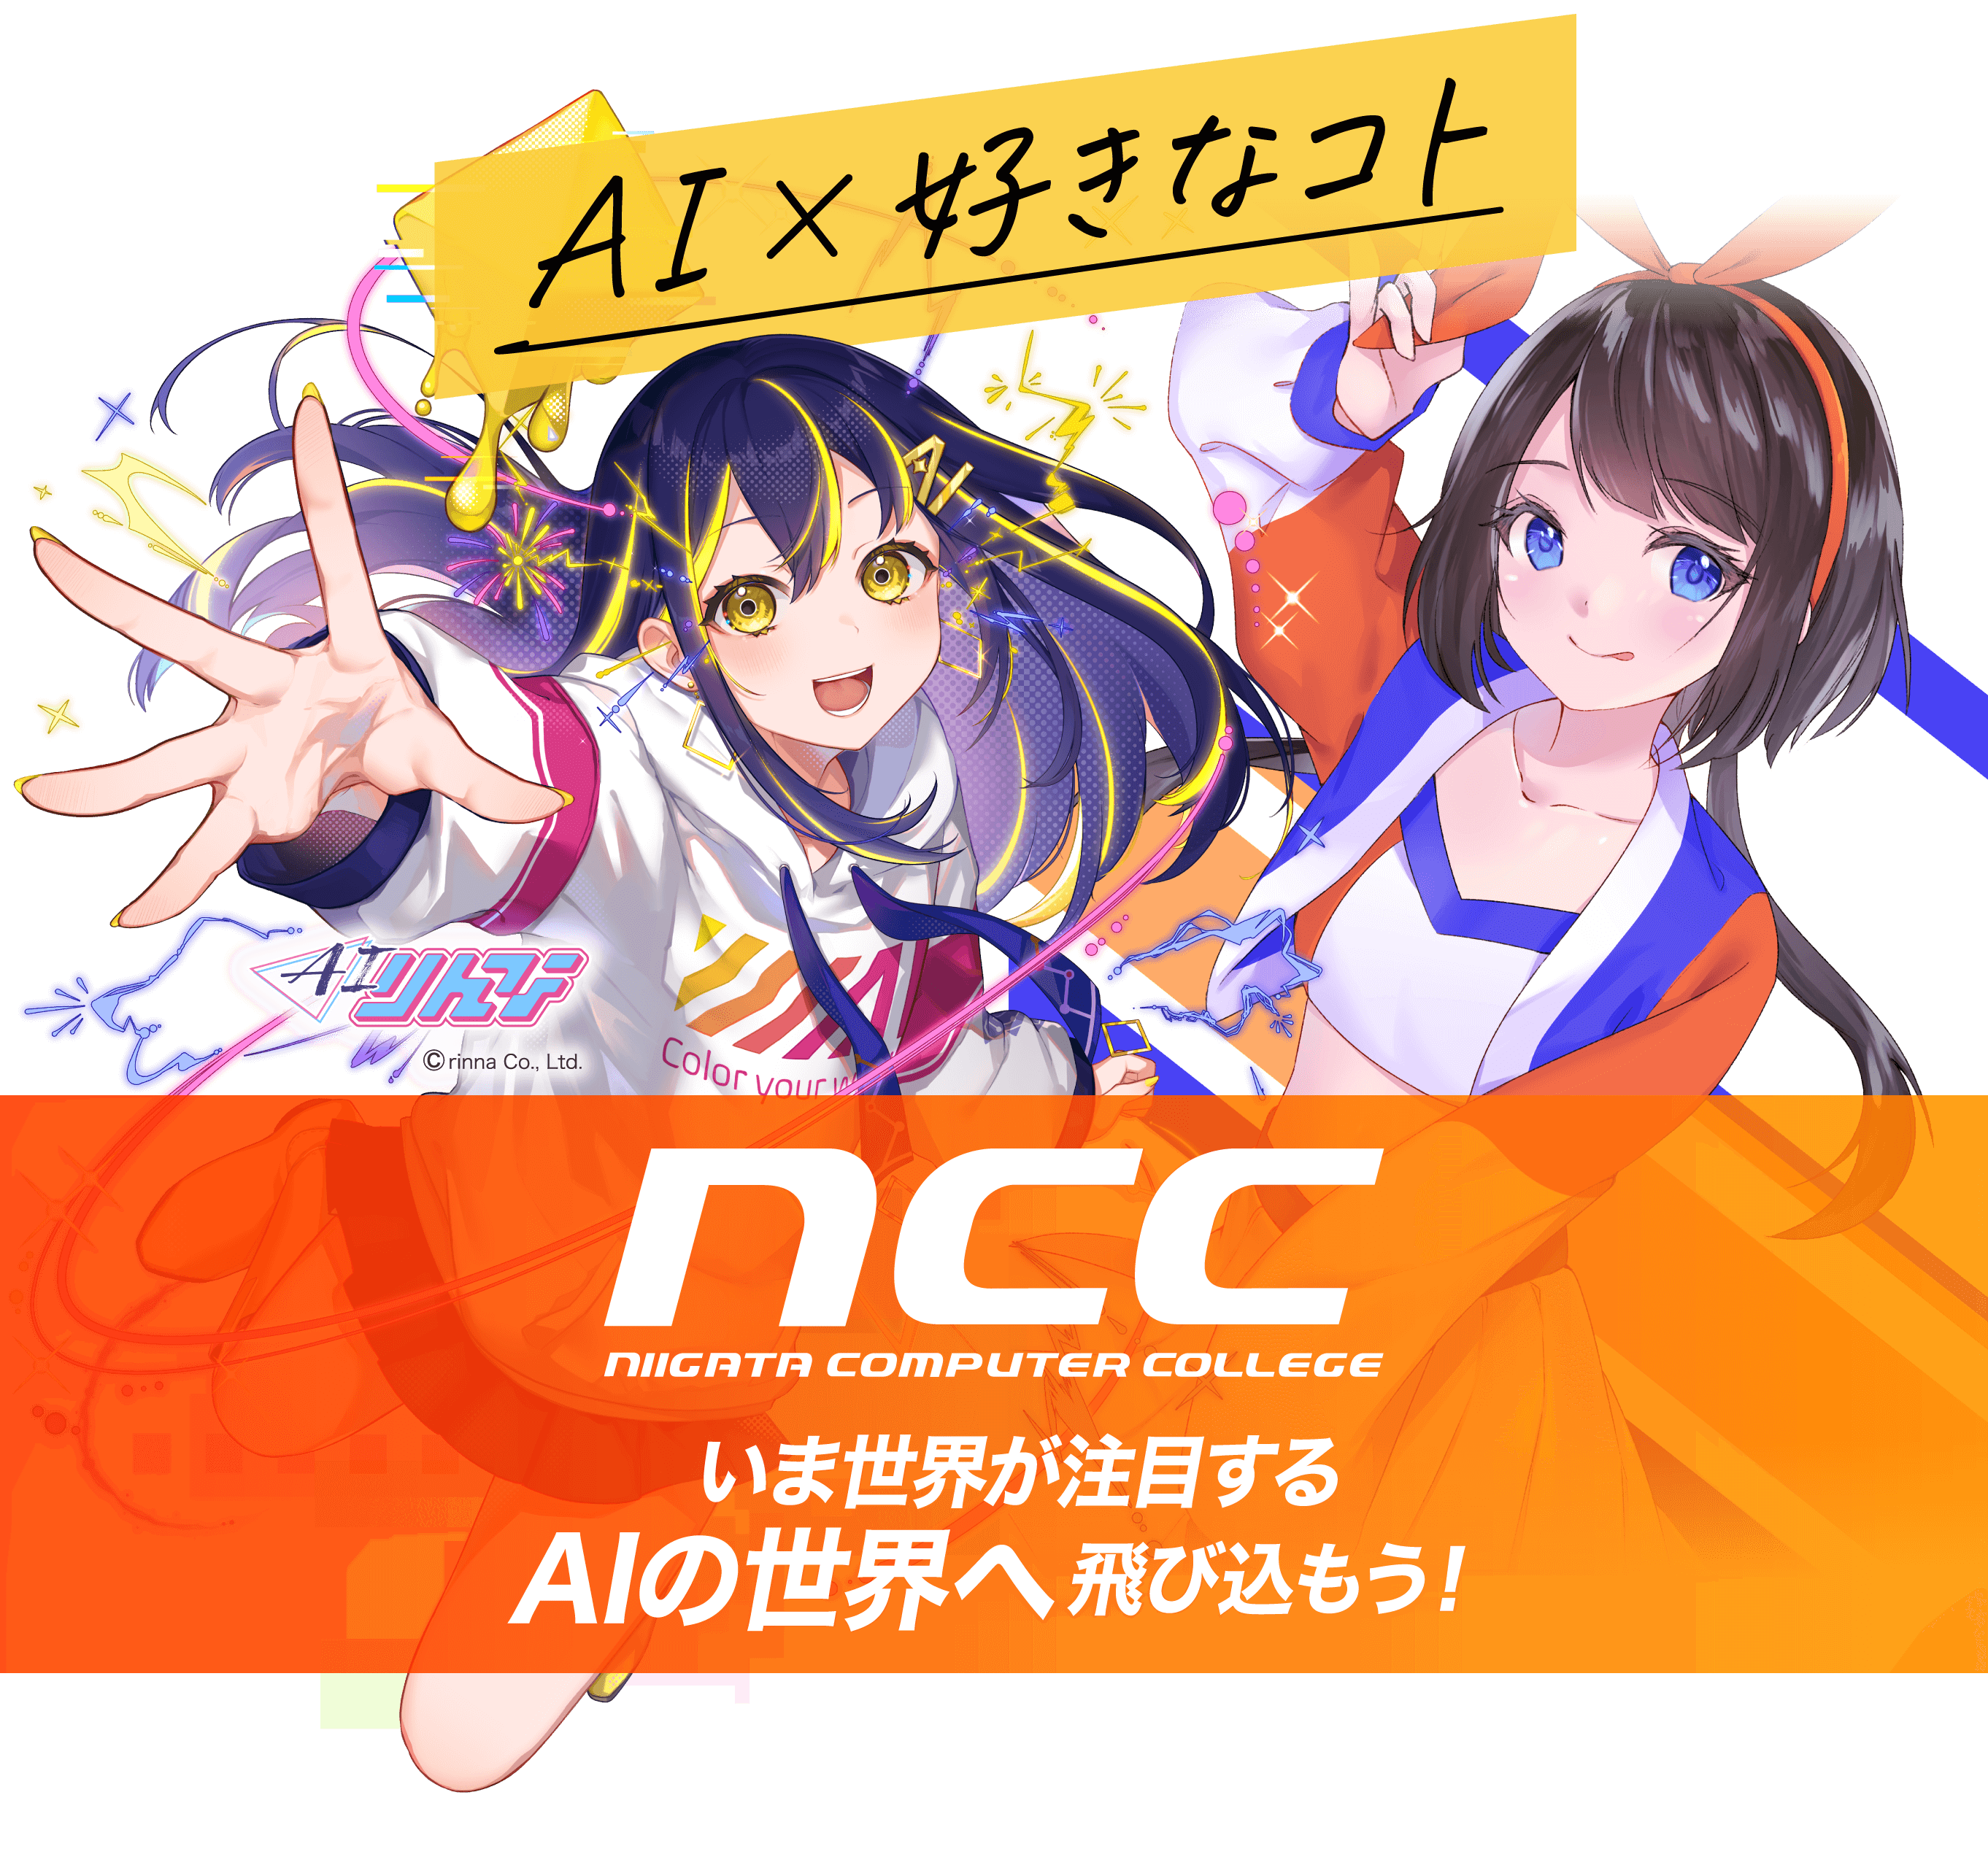 AI × 好きなこと　NCC新潟コンピューター専門学校で最先端分野を学ぼう！